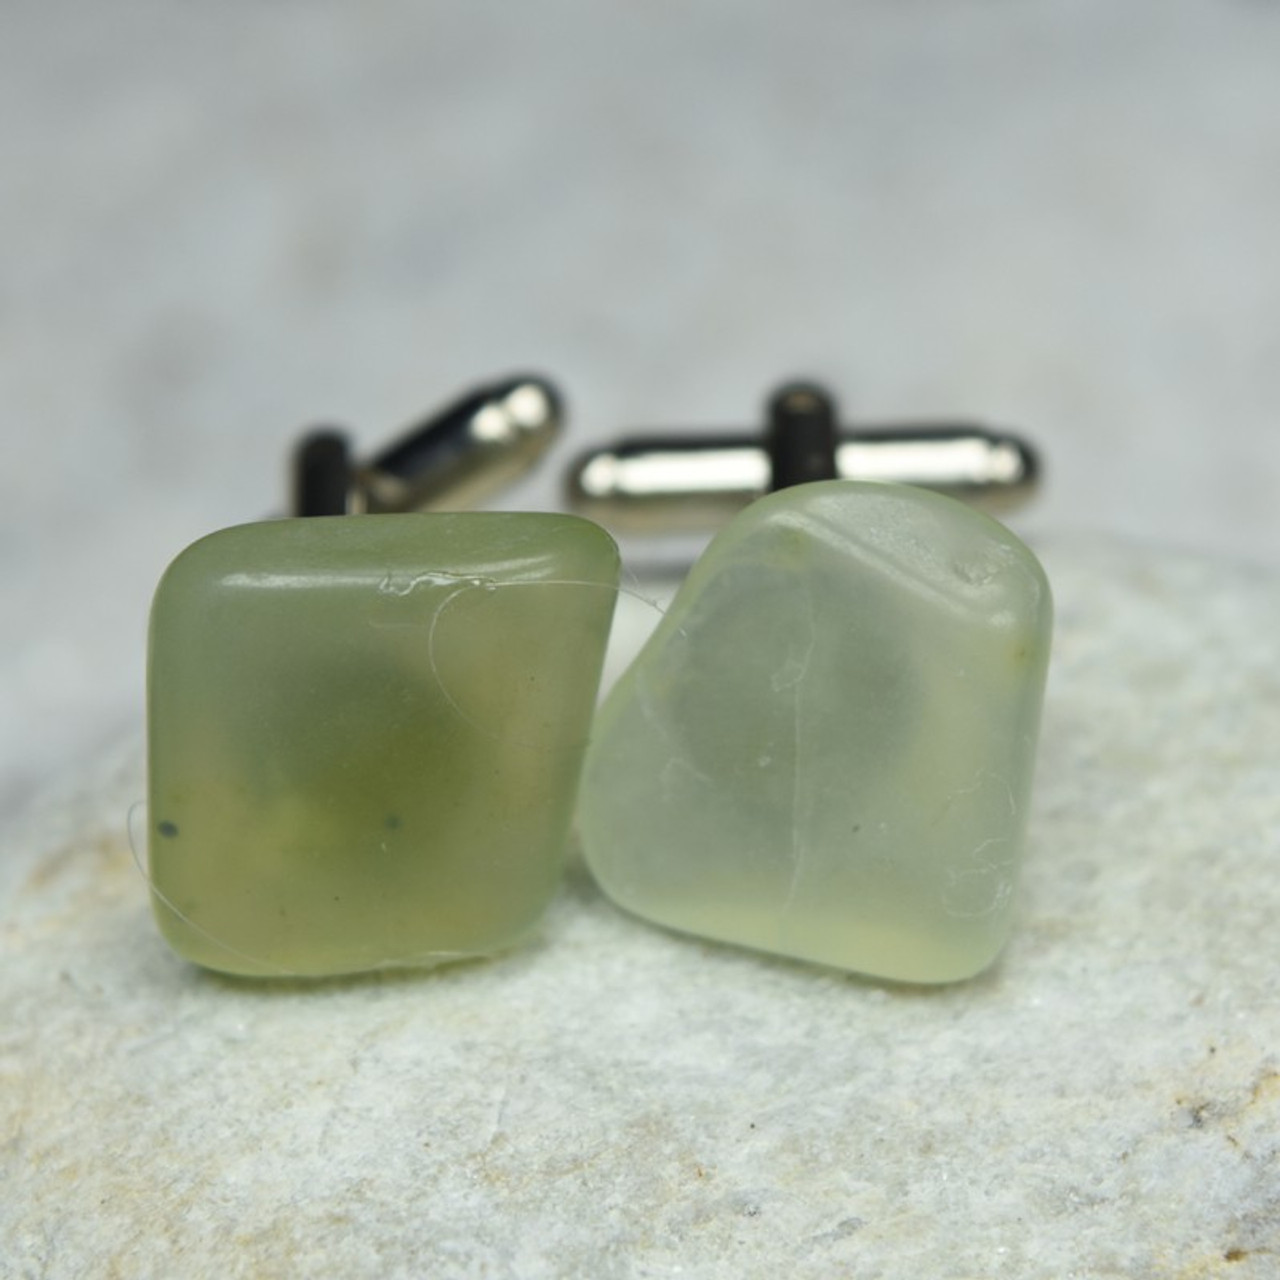 Green Jade Stone Cufflinks Handmade - 1 Set - Made to Order